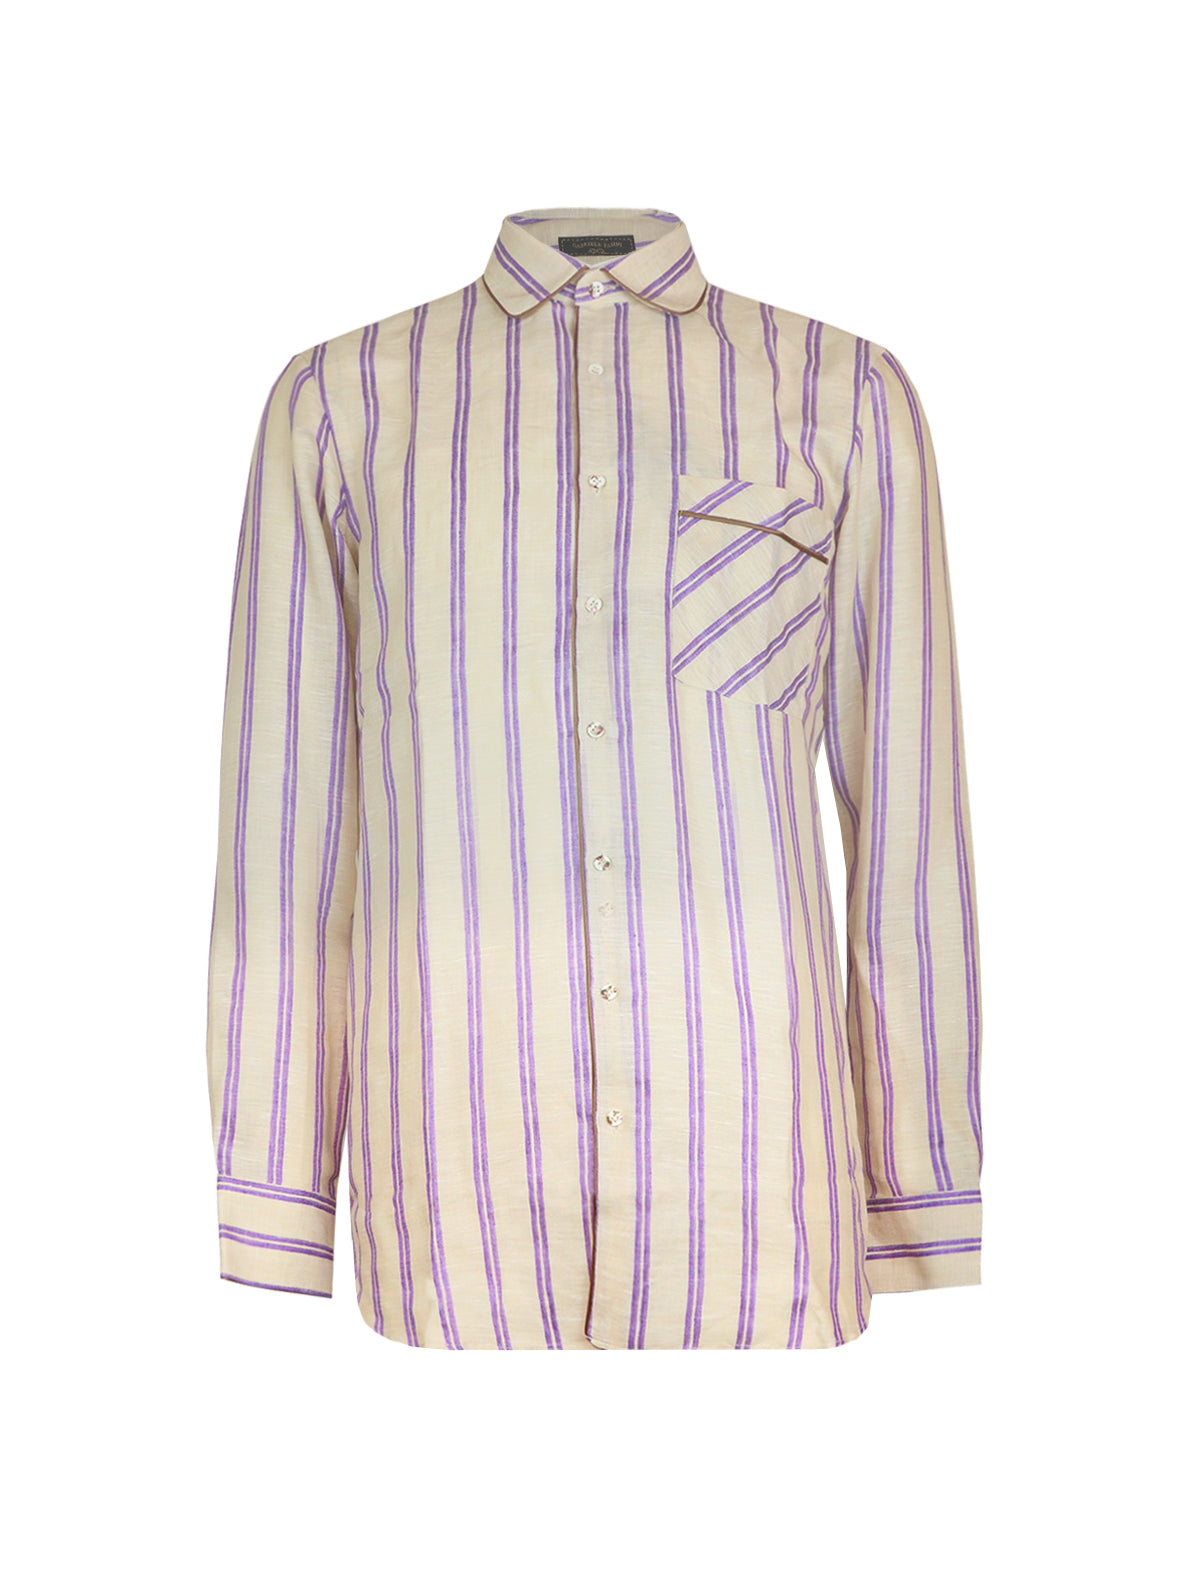 Gabriele Pasini Flax Striped Shirt in Khaki/Purple